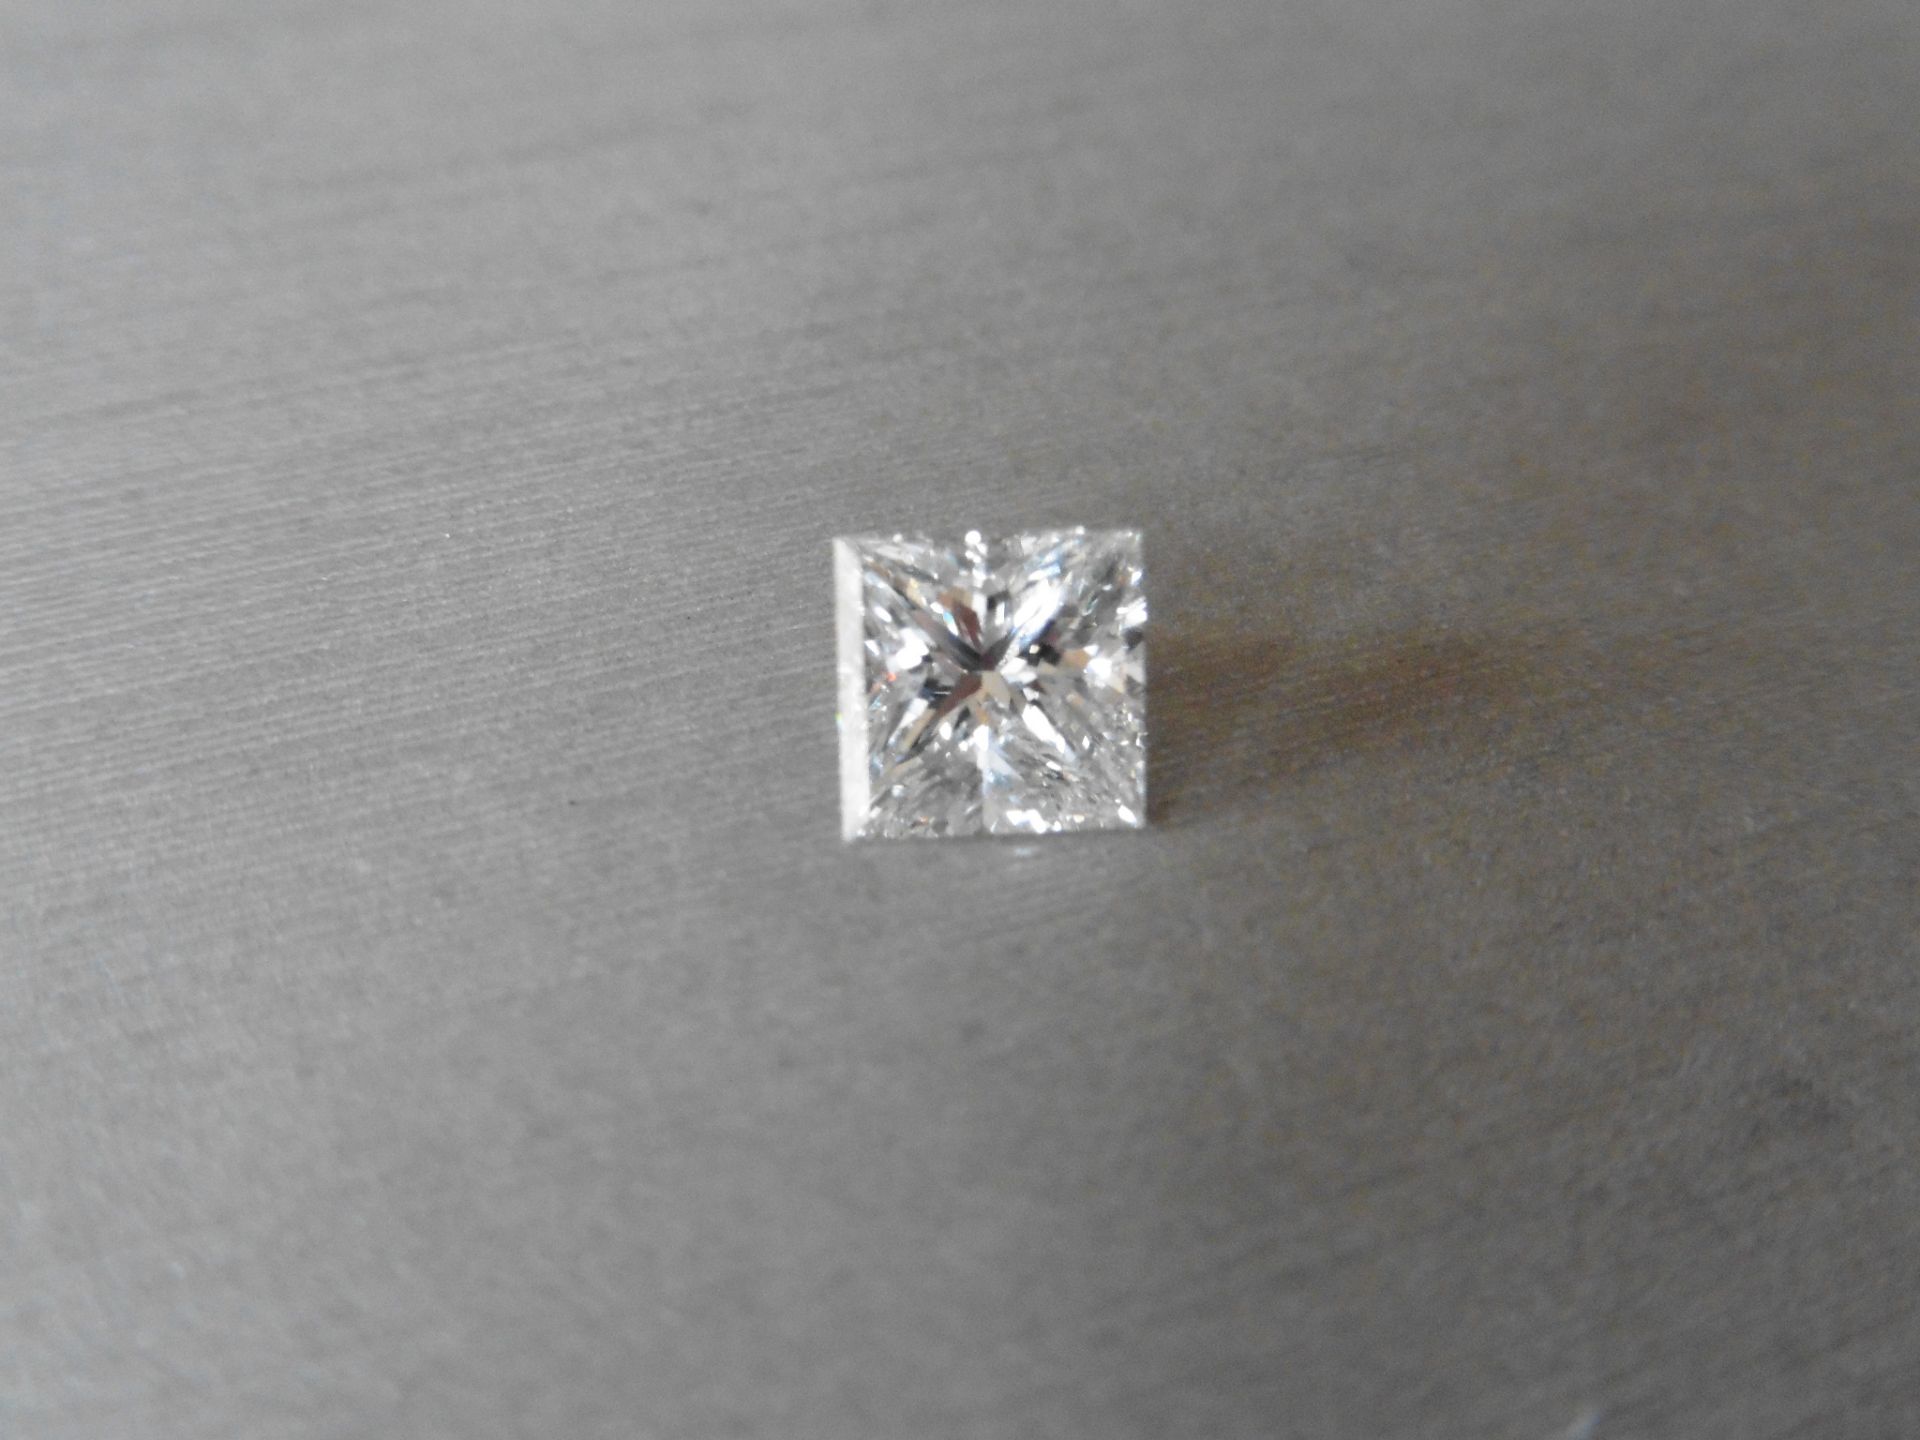 1.75ct single princess cut diamond. Measurements 6.75 x 6.68 x 4.86mm. G colour and VS1 clarity.